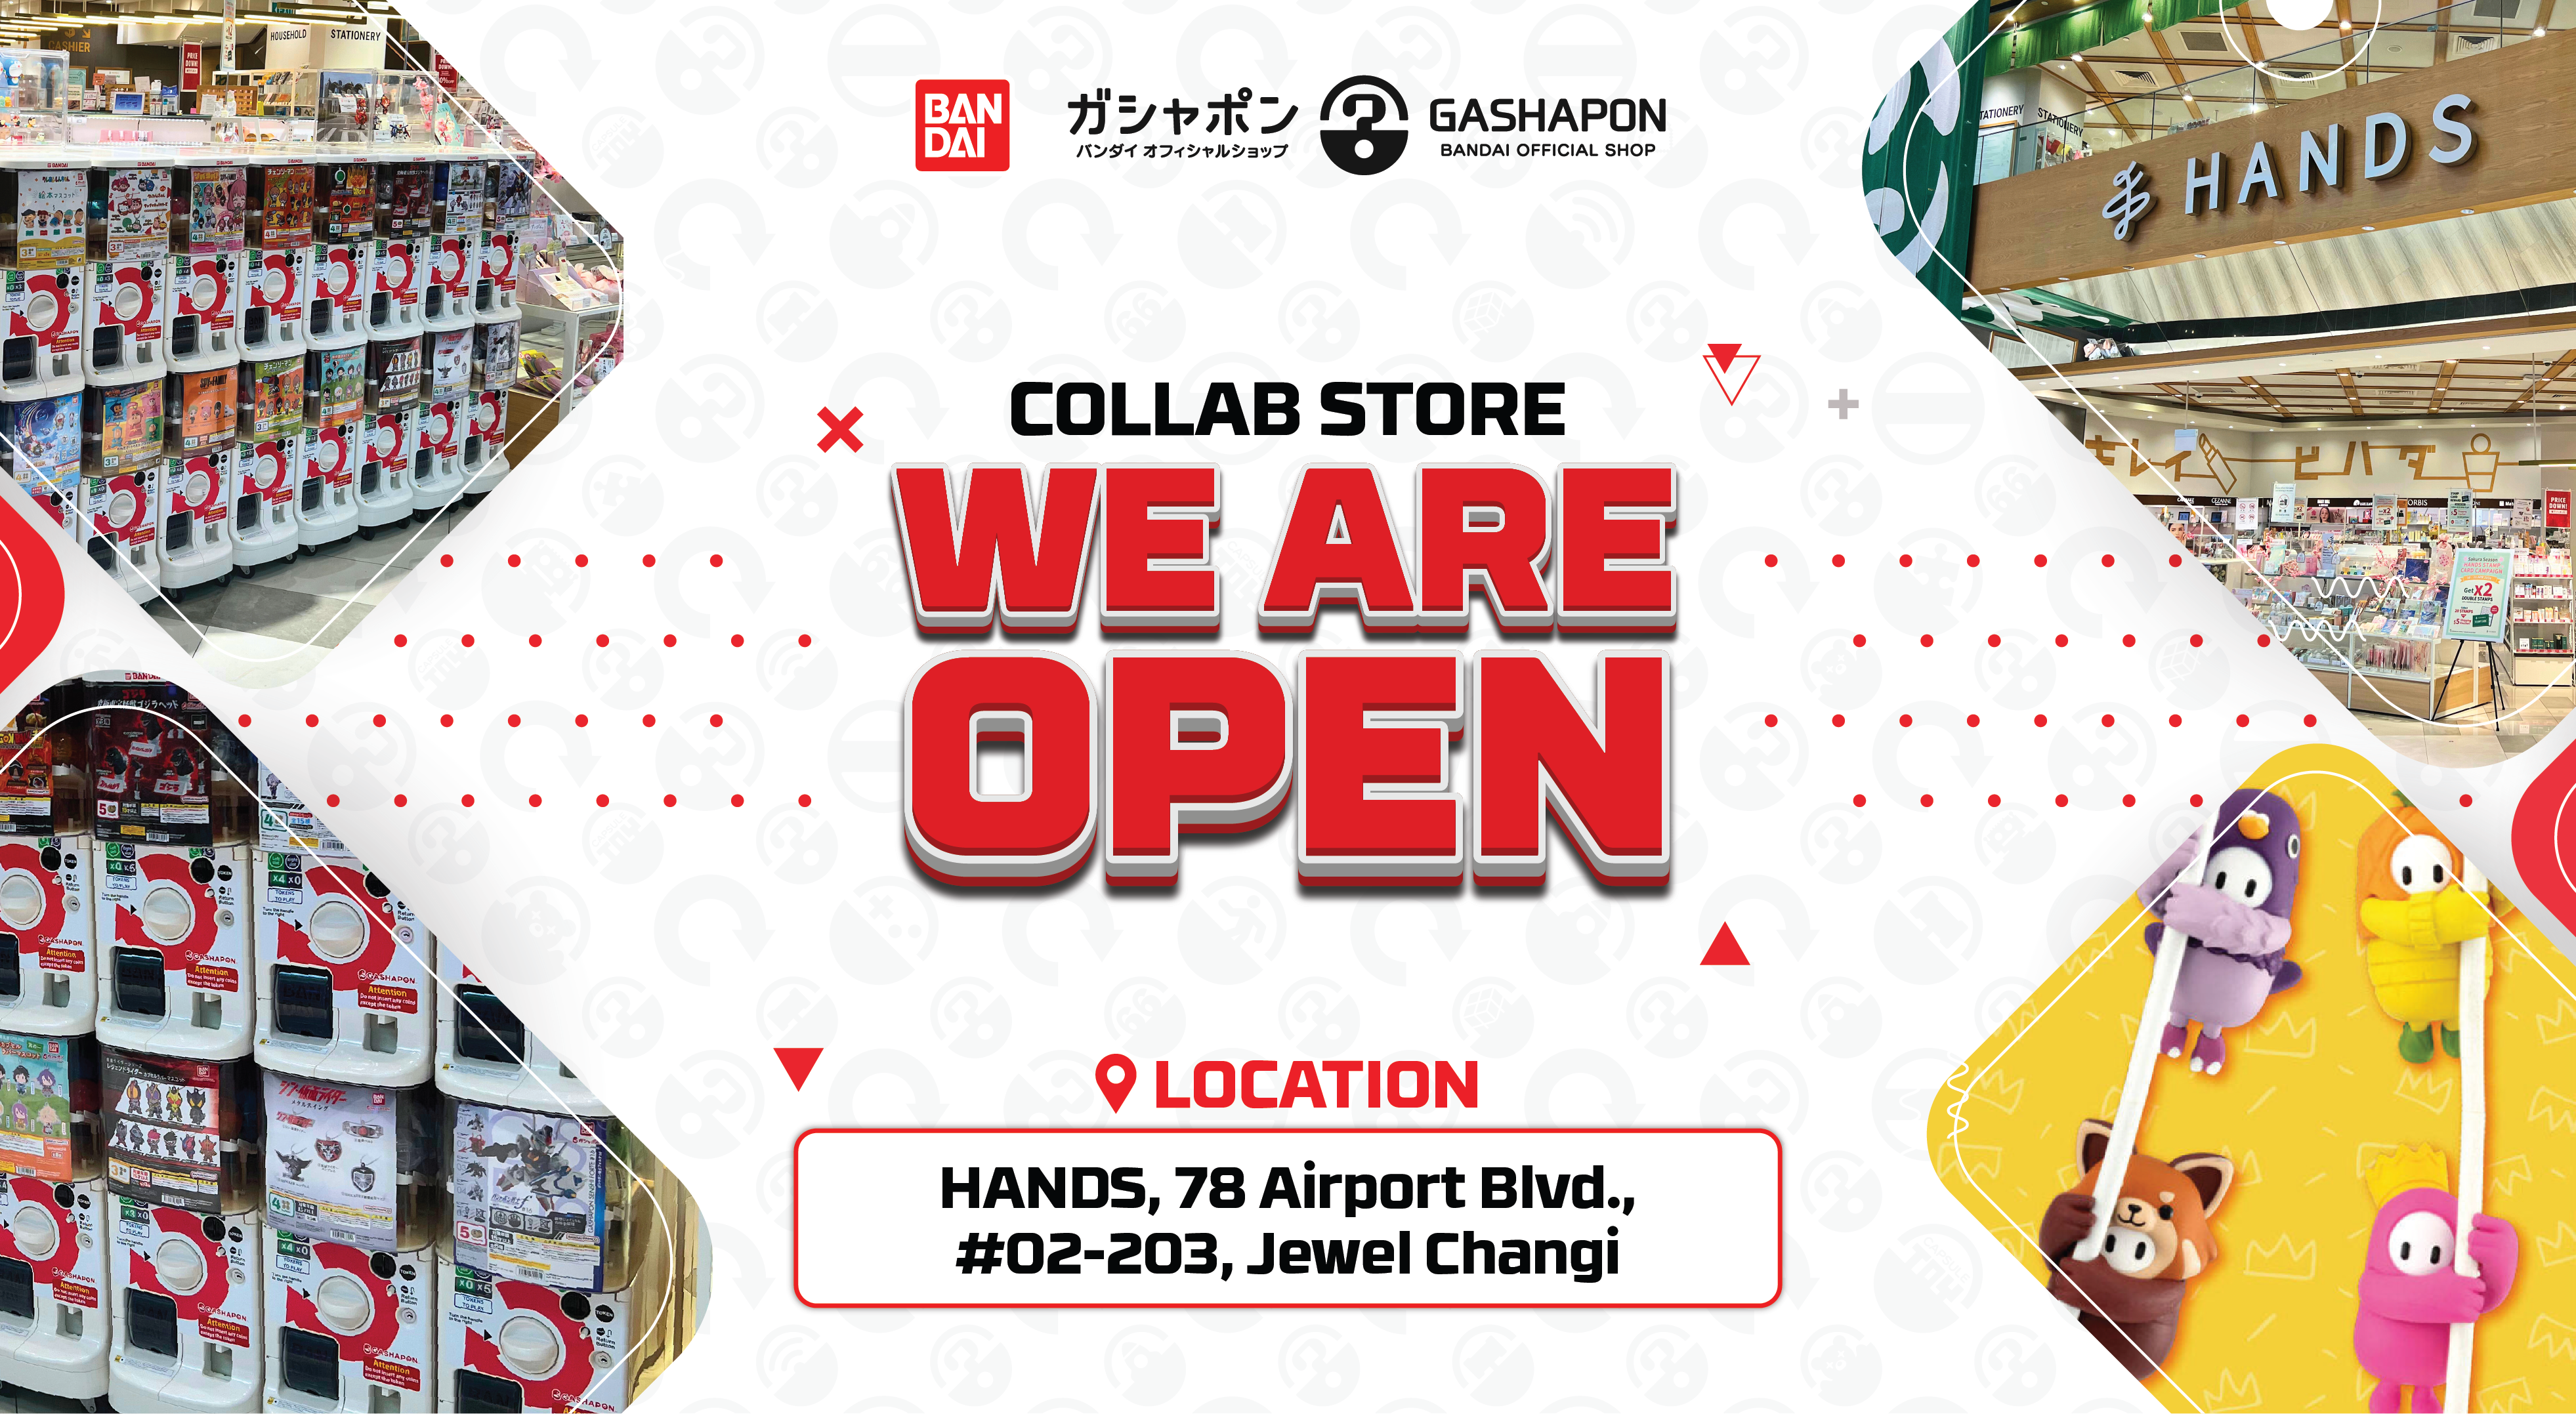 Gashapon Bandai Official Collab Store at HANDS Singapore Jewel Changi